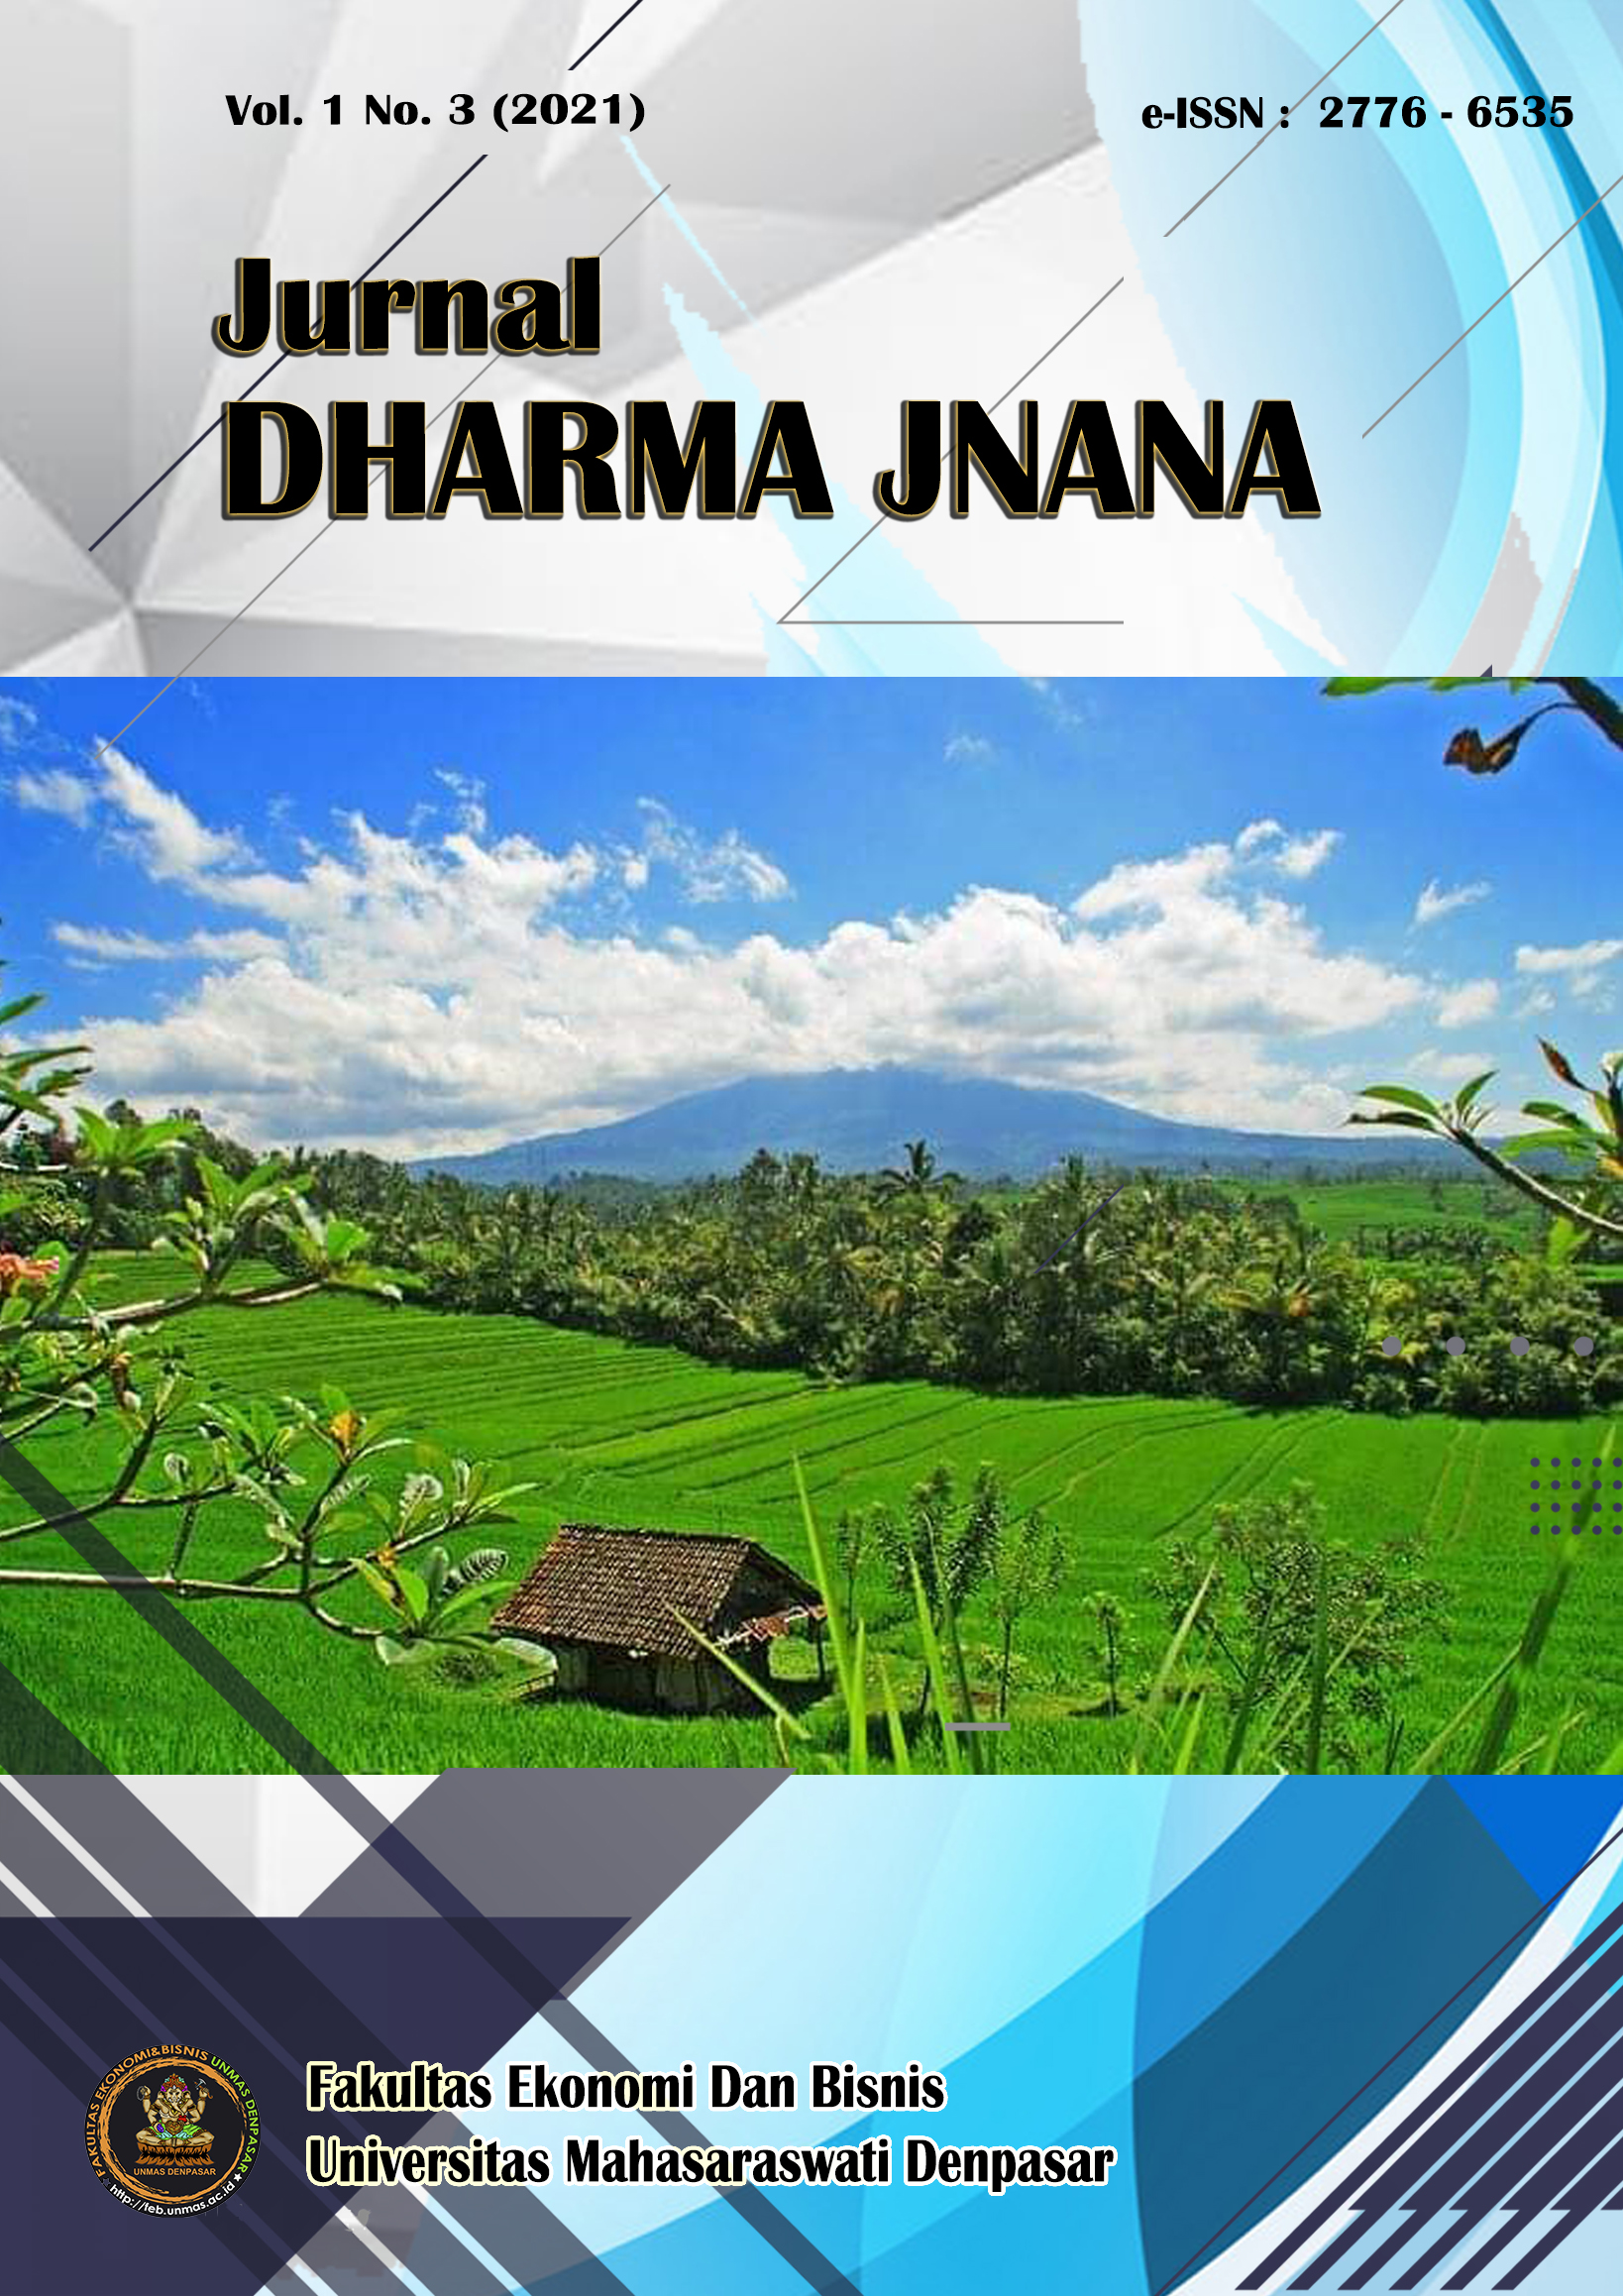 					View Vol. 1 No. 3 (2021): JURNAL DHARMA JNANA
				